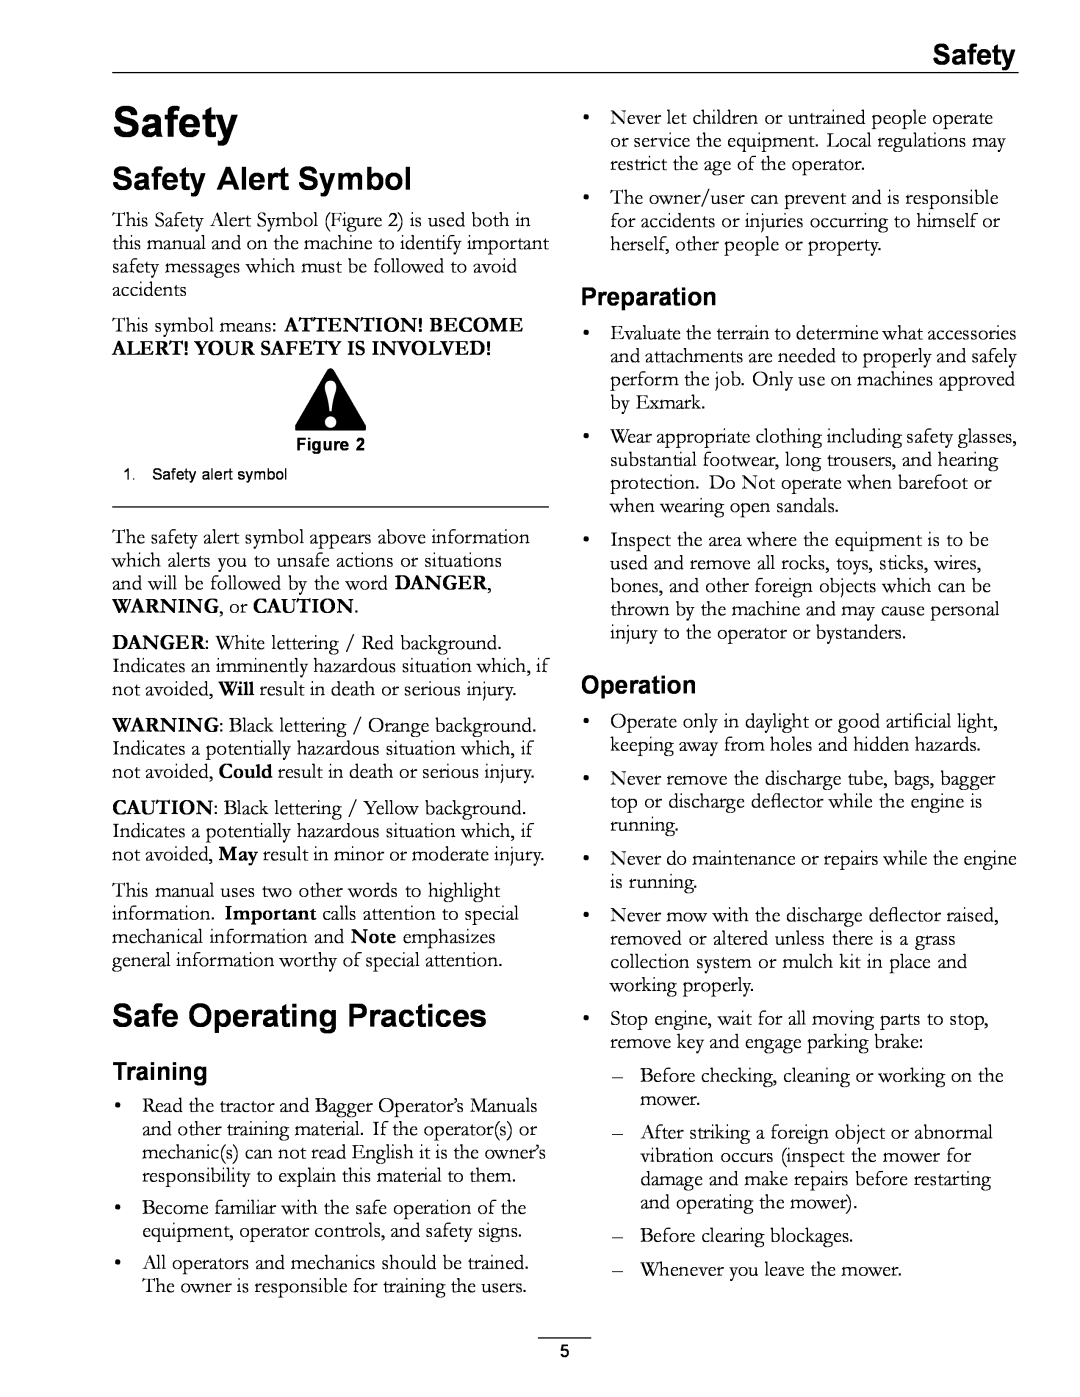 Exmark 4500-438 rev. a manual Safety Alert Symbol, Safe Operating Practices, Training, Preparation, Operation 